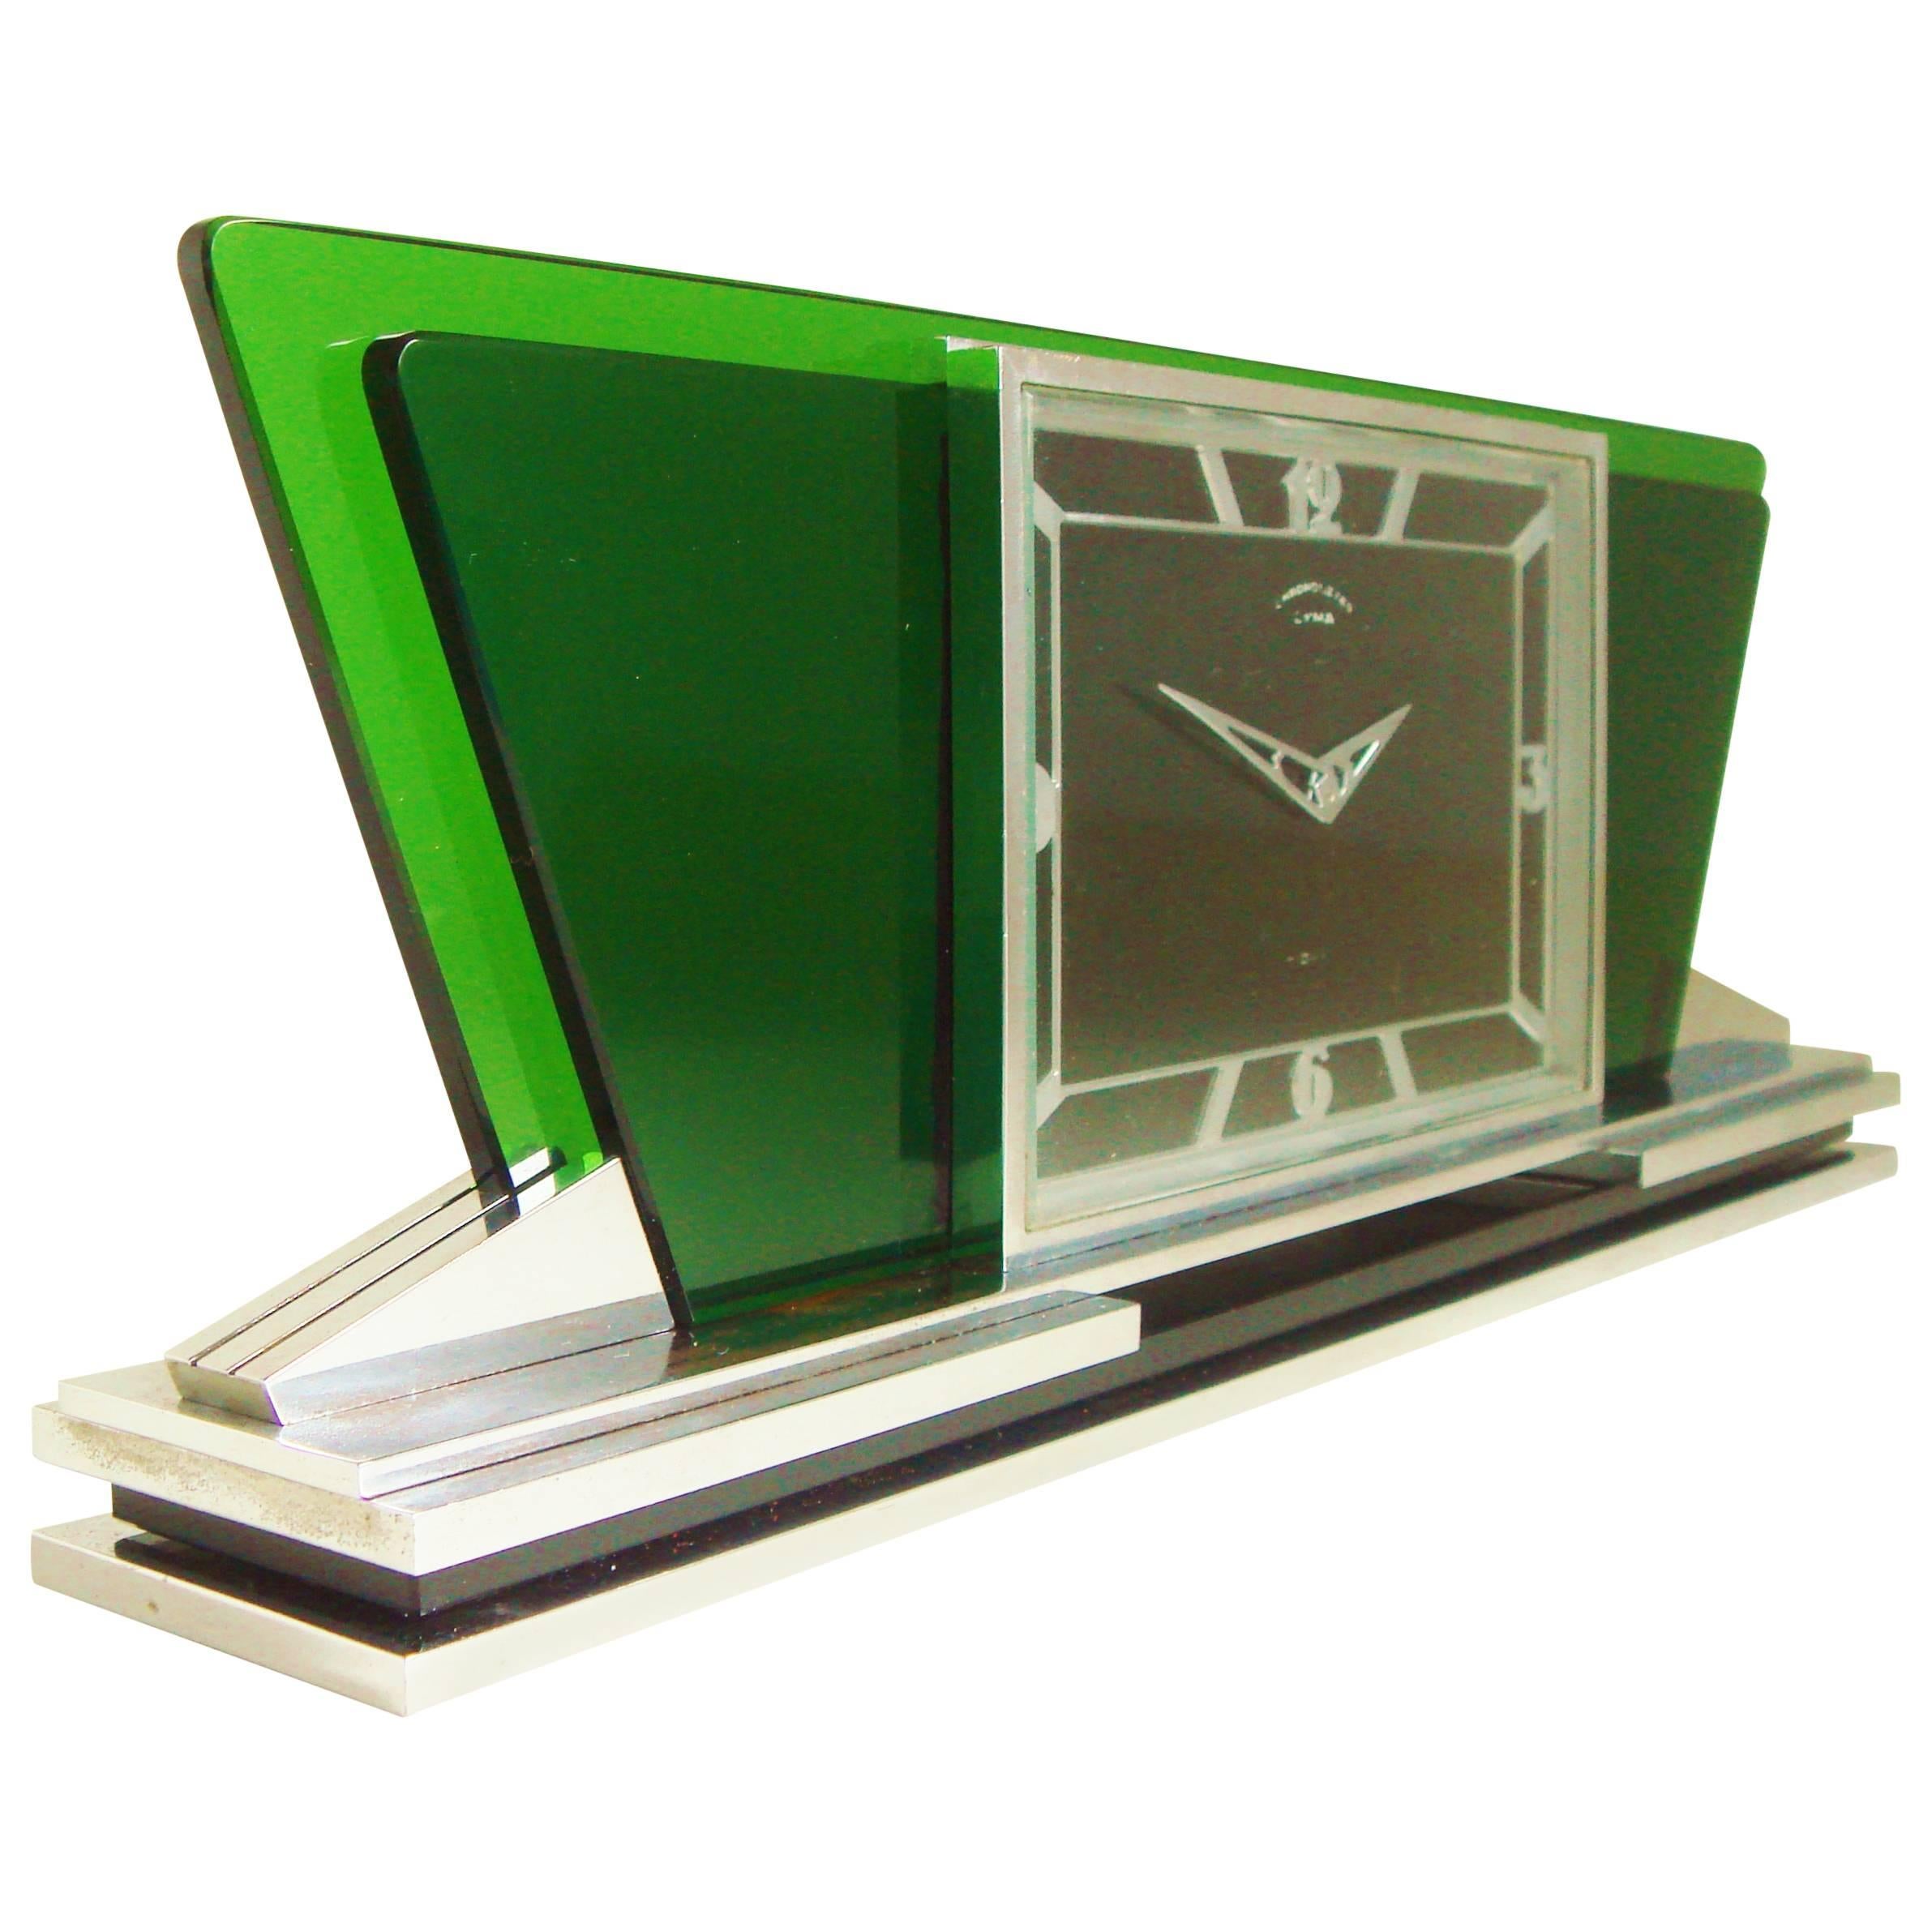 Stunning Swiss Art Deco Chrome and Glass Mechanical Desk Chronometer by CYMA 